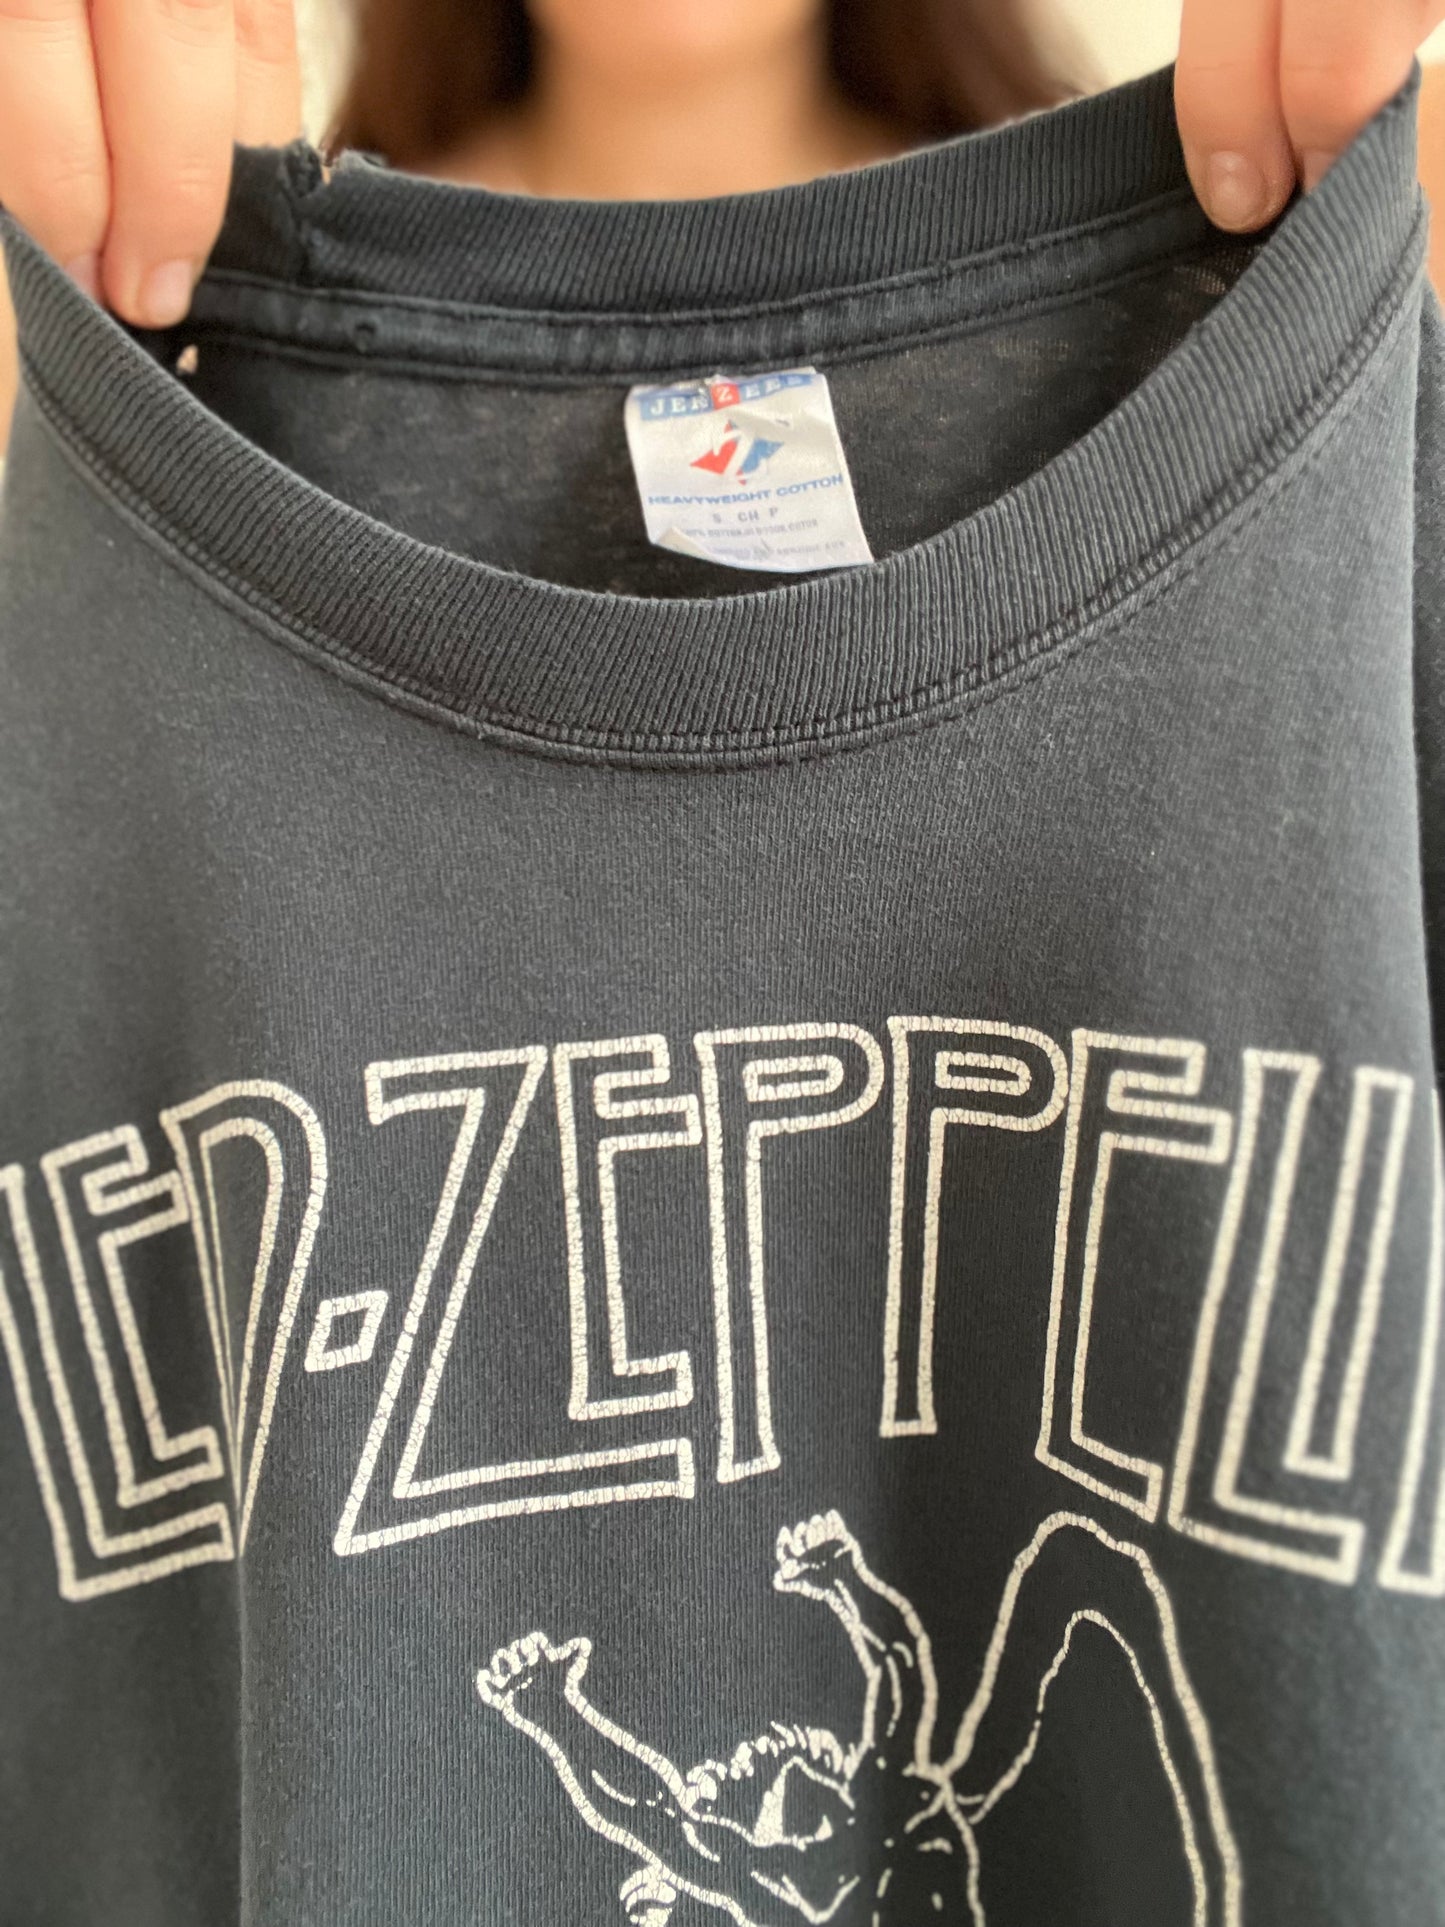 1977 U.S. Led Zeppelin Tour T-Shirt - Womens S